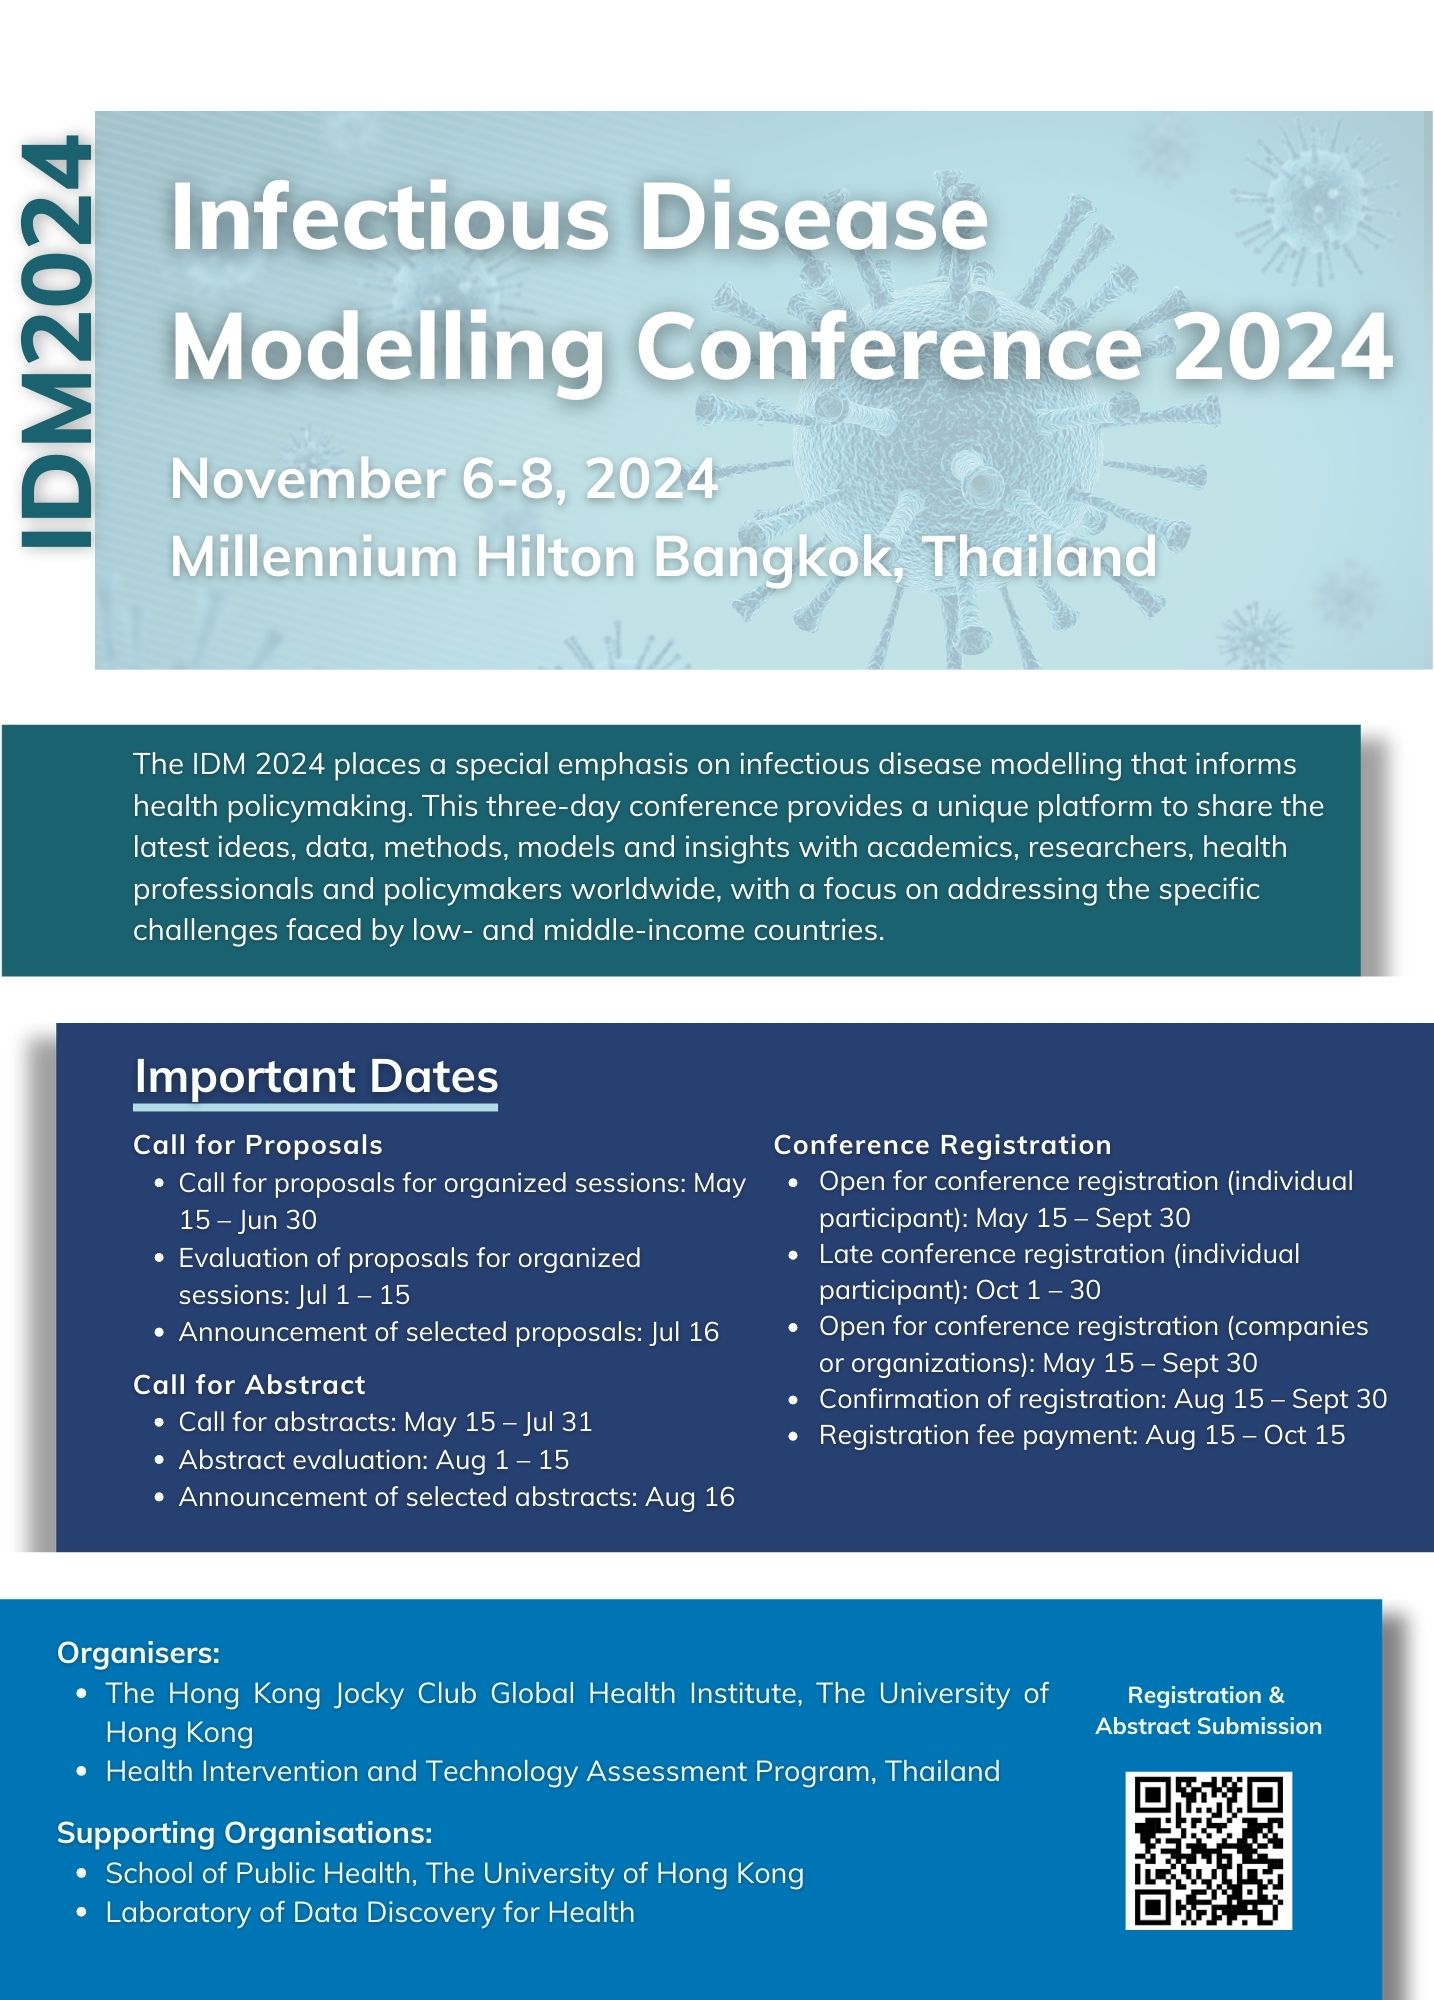 IDM Conference